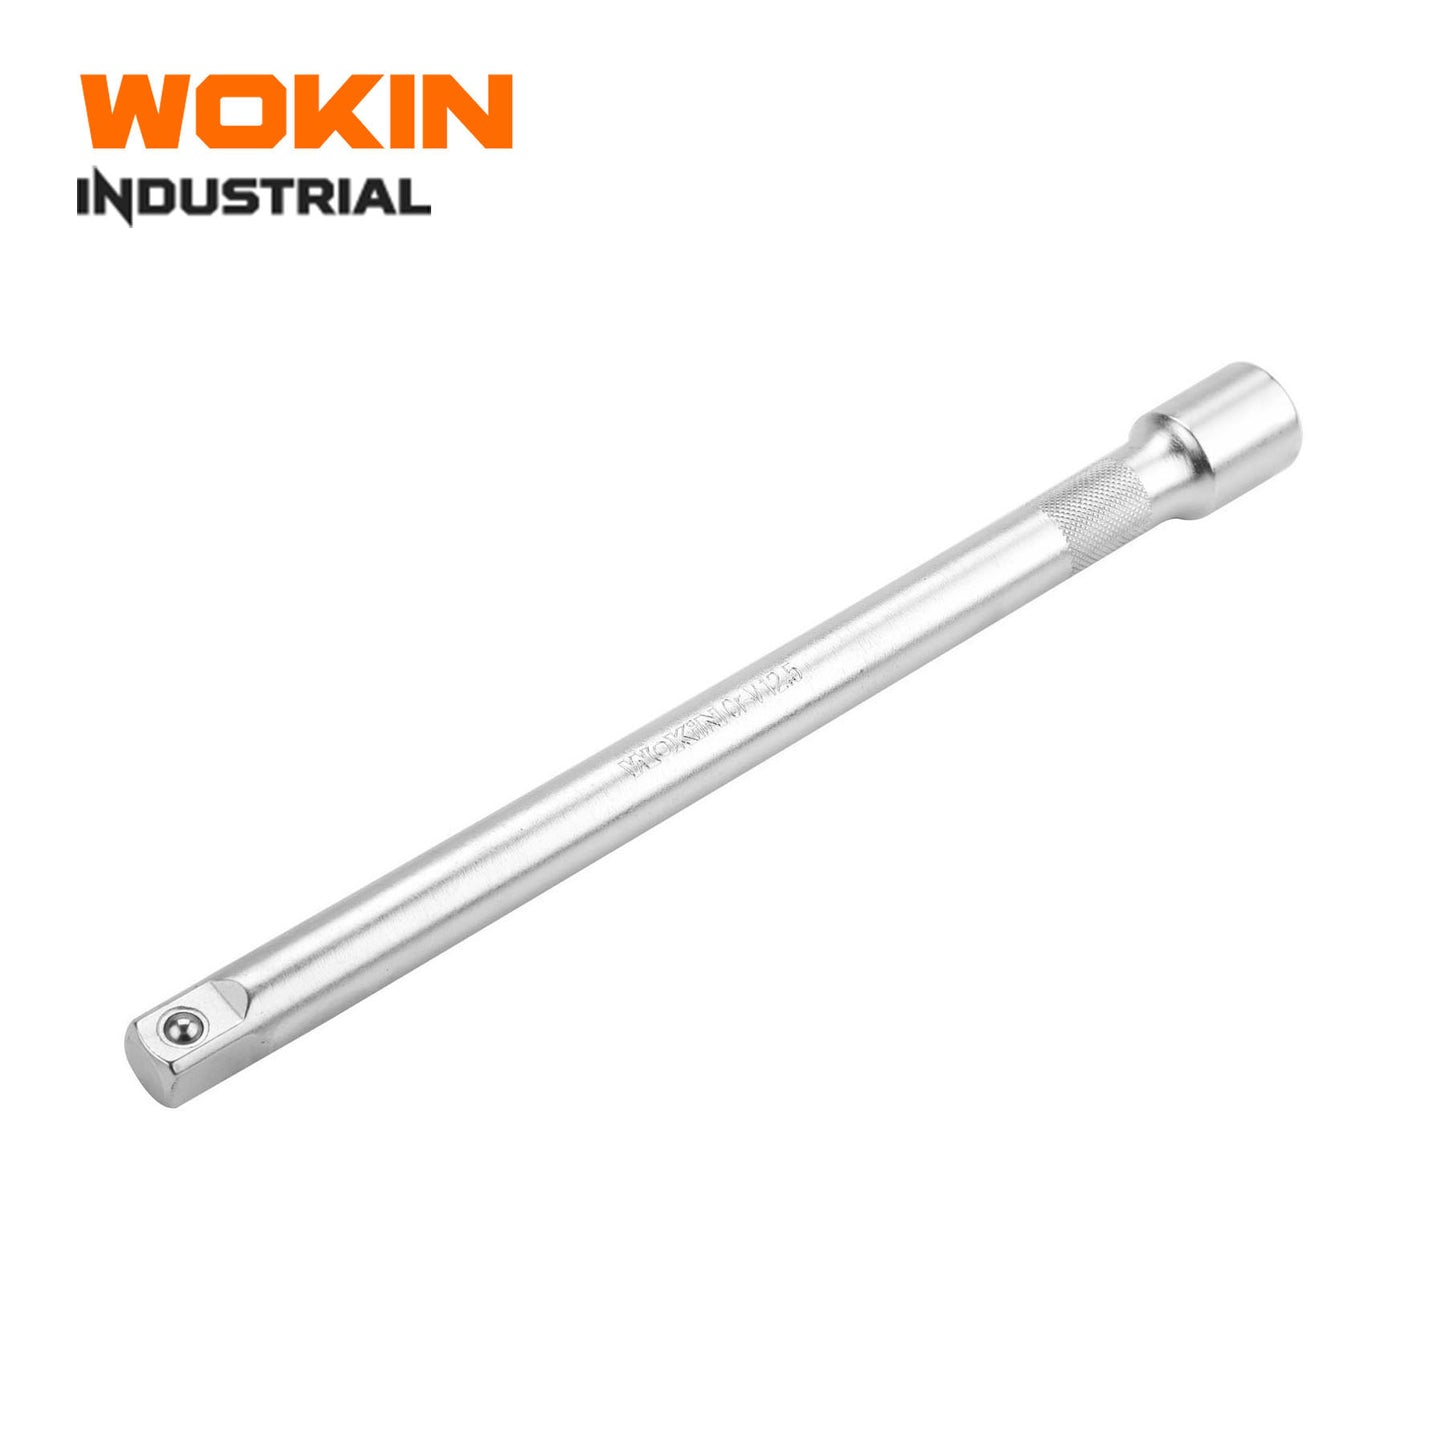 Wokin 1/2 Inch X 10 inch Extension Bar